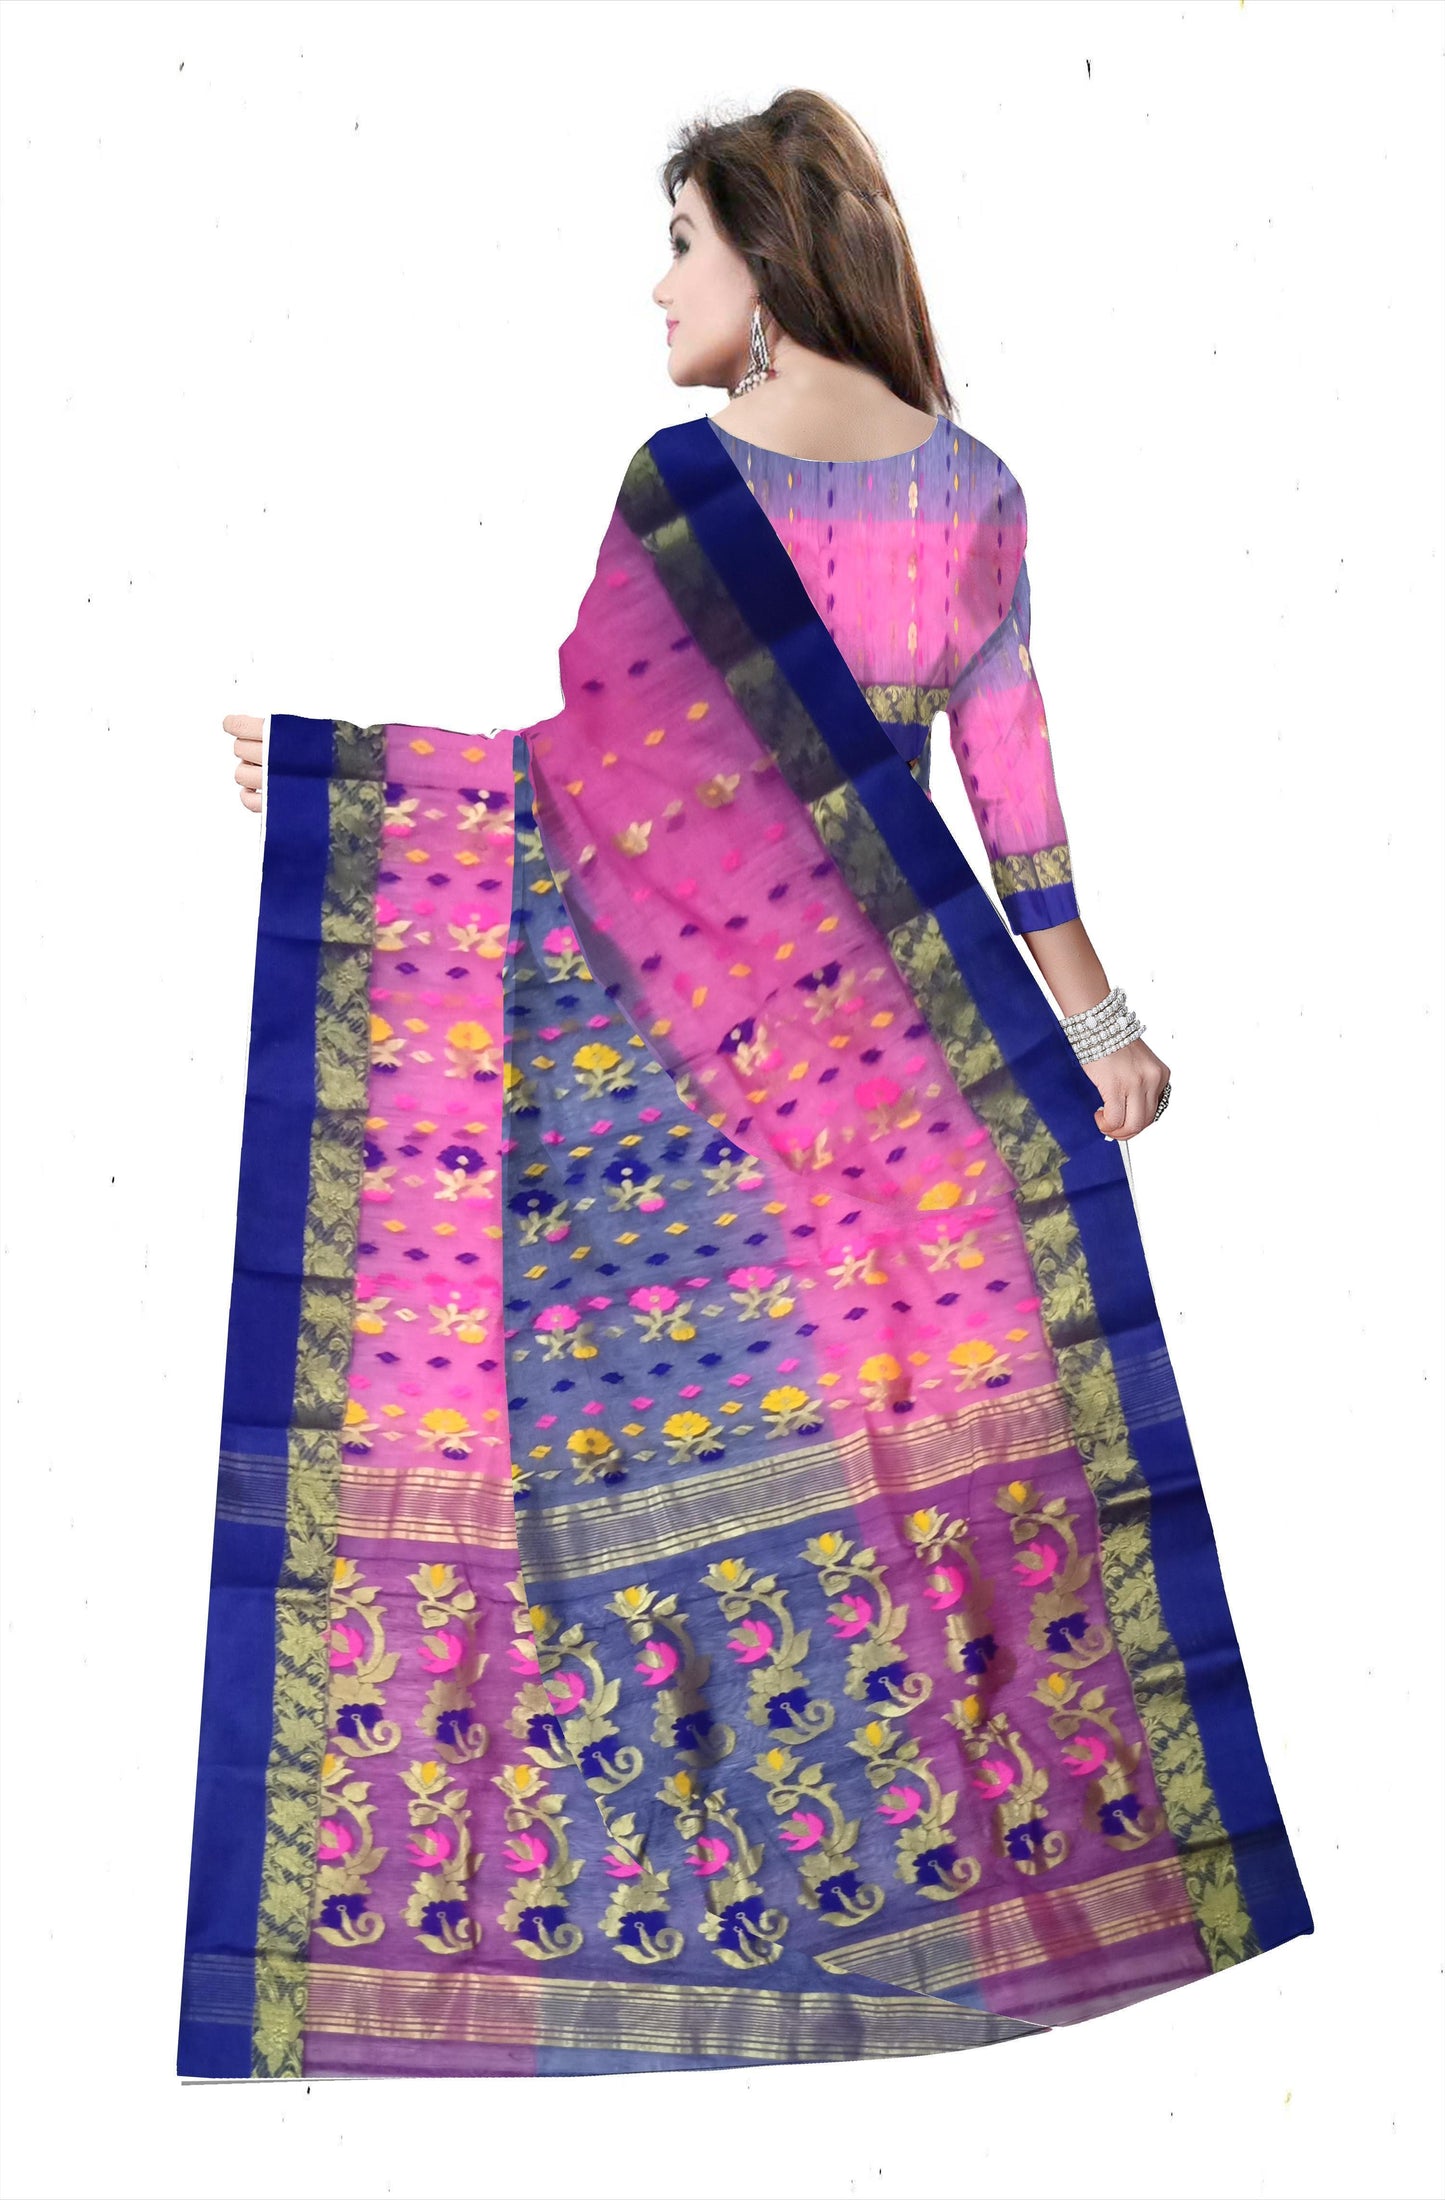 Pradip Fabrics Ethnic Women's Tant Silk Dark Blue and Pink Color Buti Work Floral Design Saree